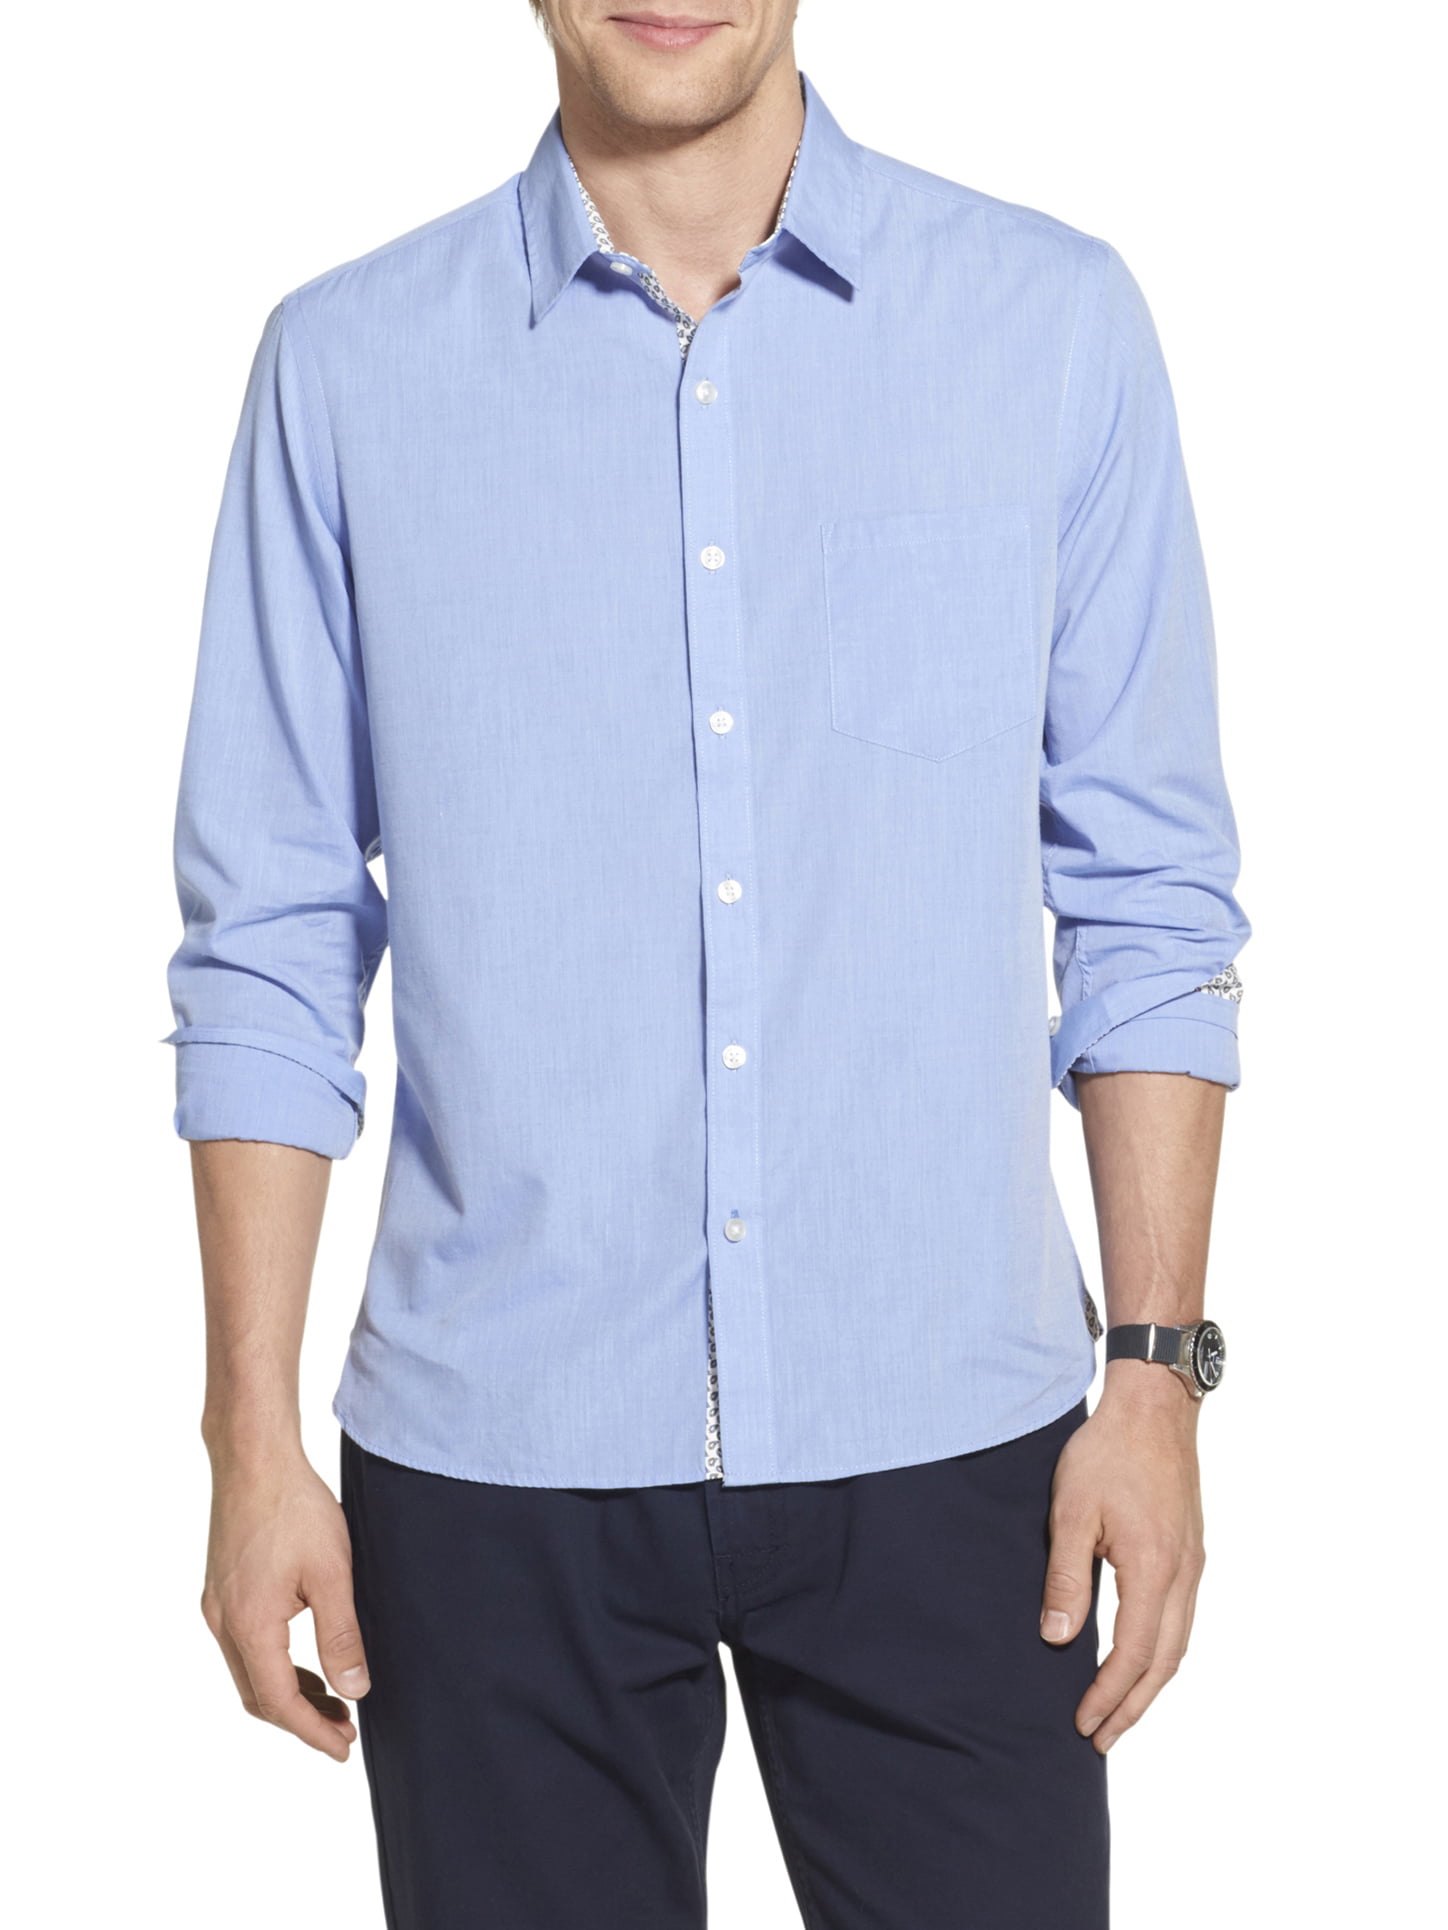 Geoffrey Beene Men's Slim Fit Long Sleeve Shirt - Walmart.com